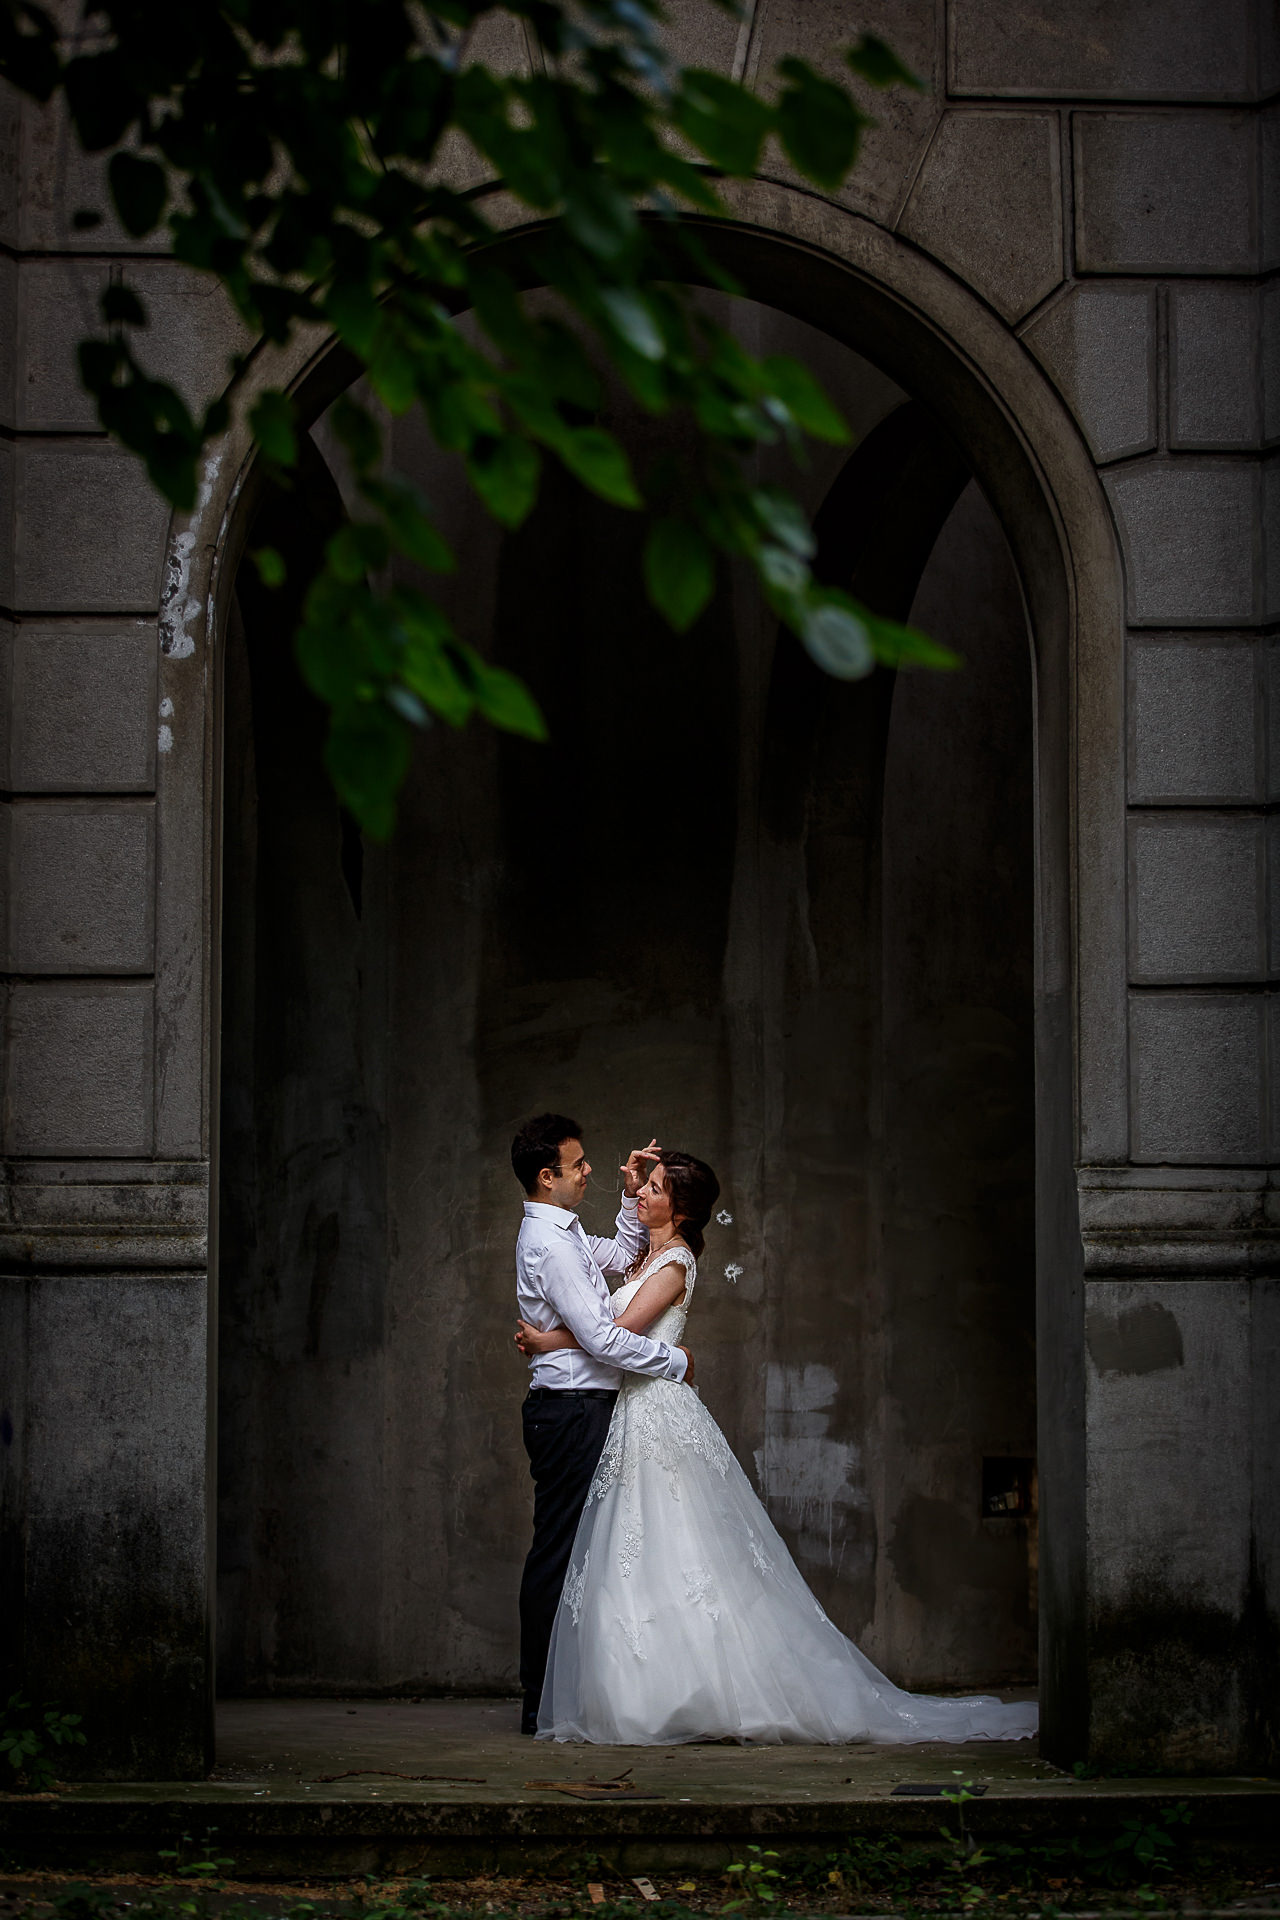 After wedding session - Buftea, Romania - Mihai Zaharia Photography - Destination wedding photographer - 12